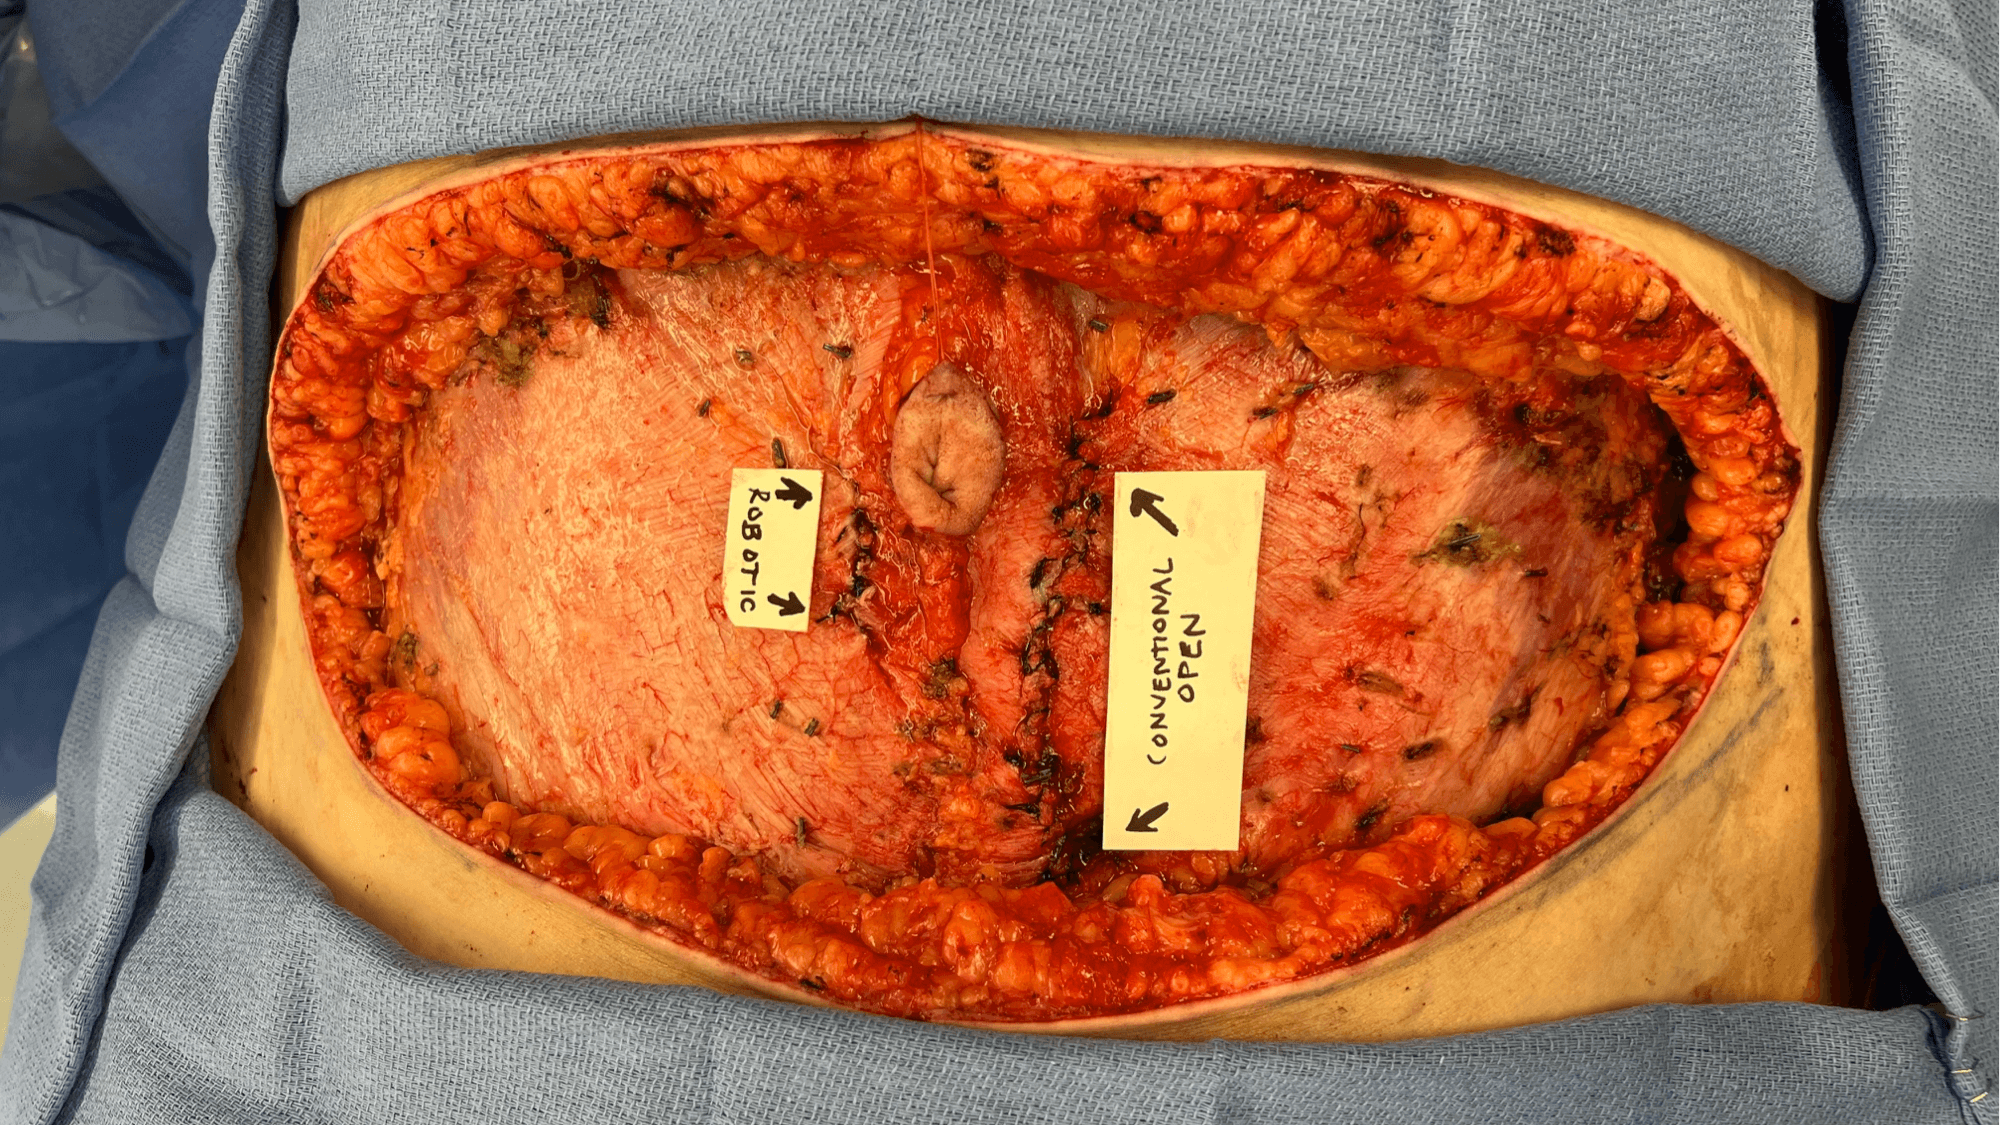 Inside of a Stomach